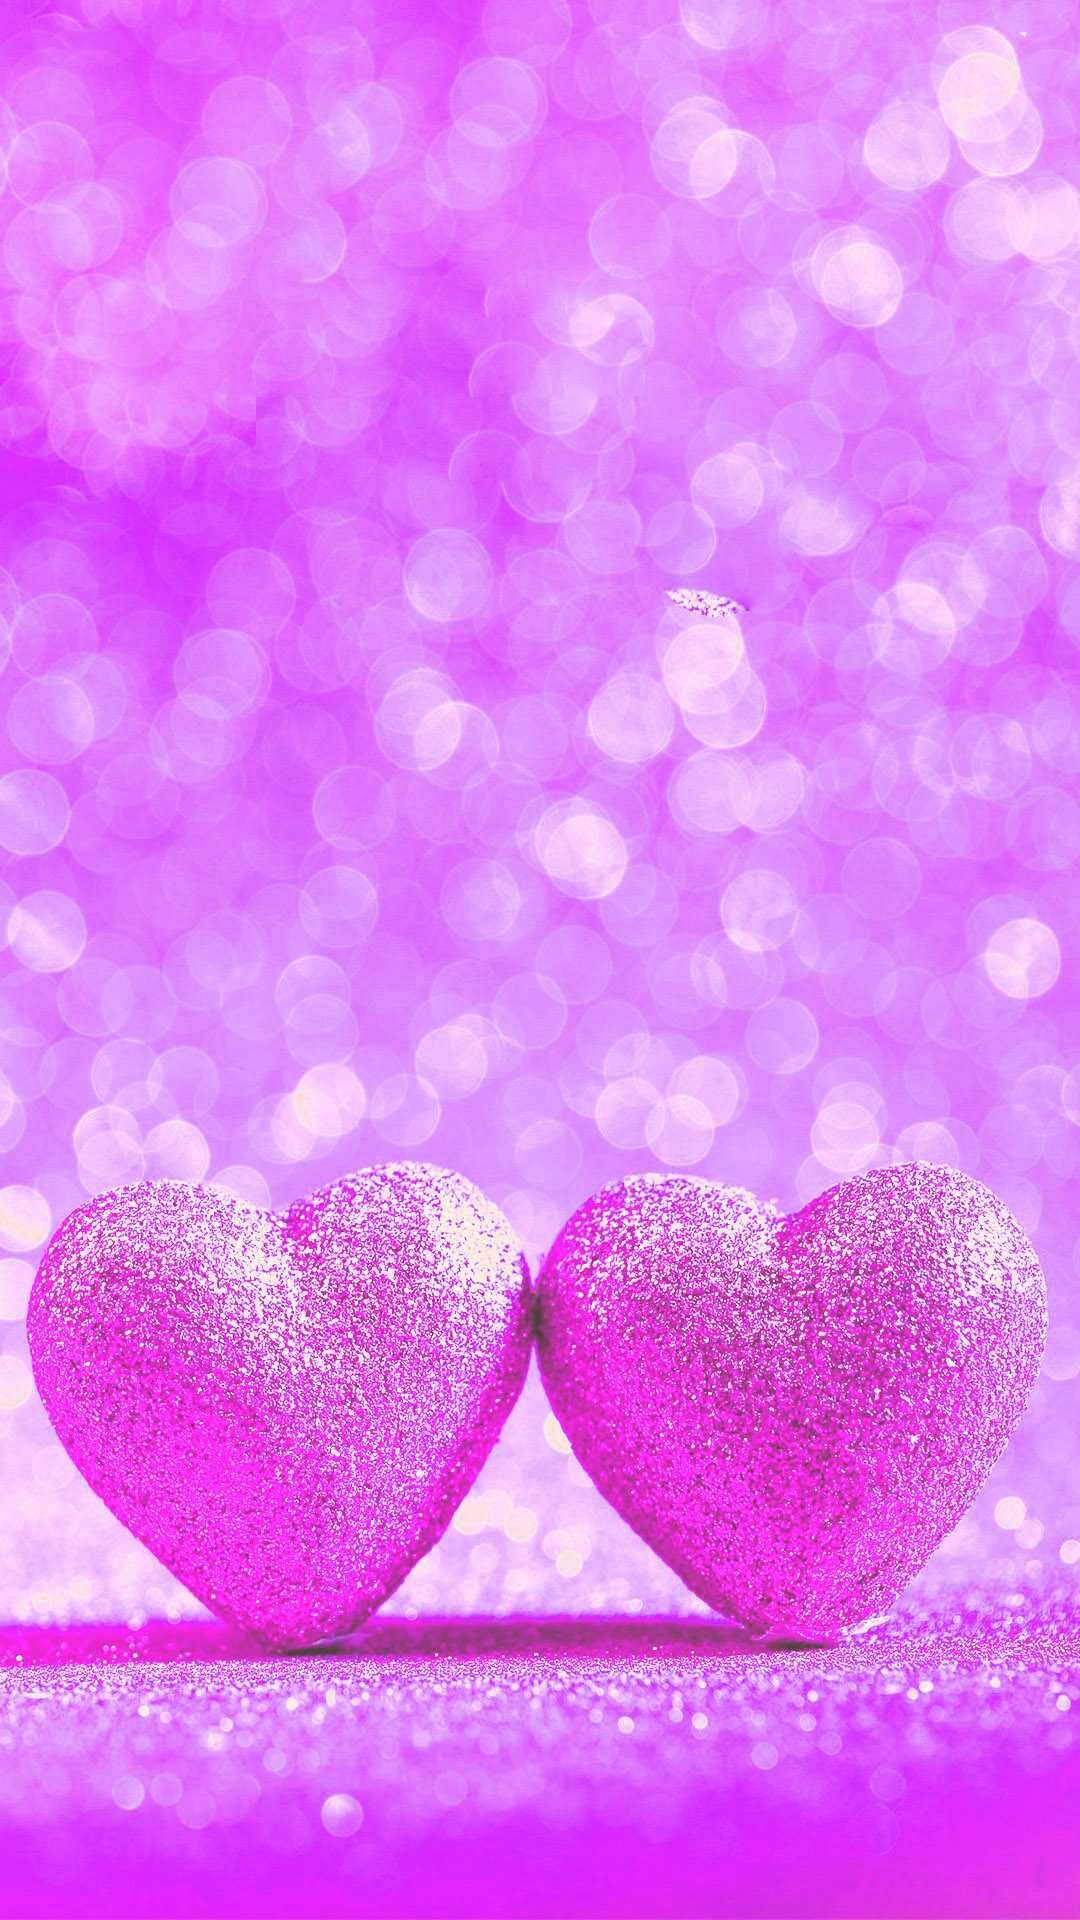 Valentine's Day: The love symbol of Valentine, Hearts. 1080x1920 Full HD Wallpaper.